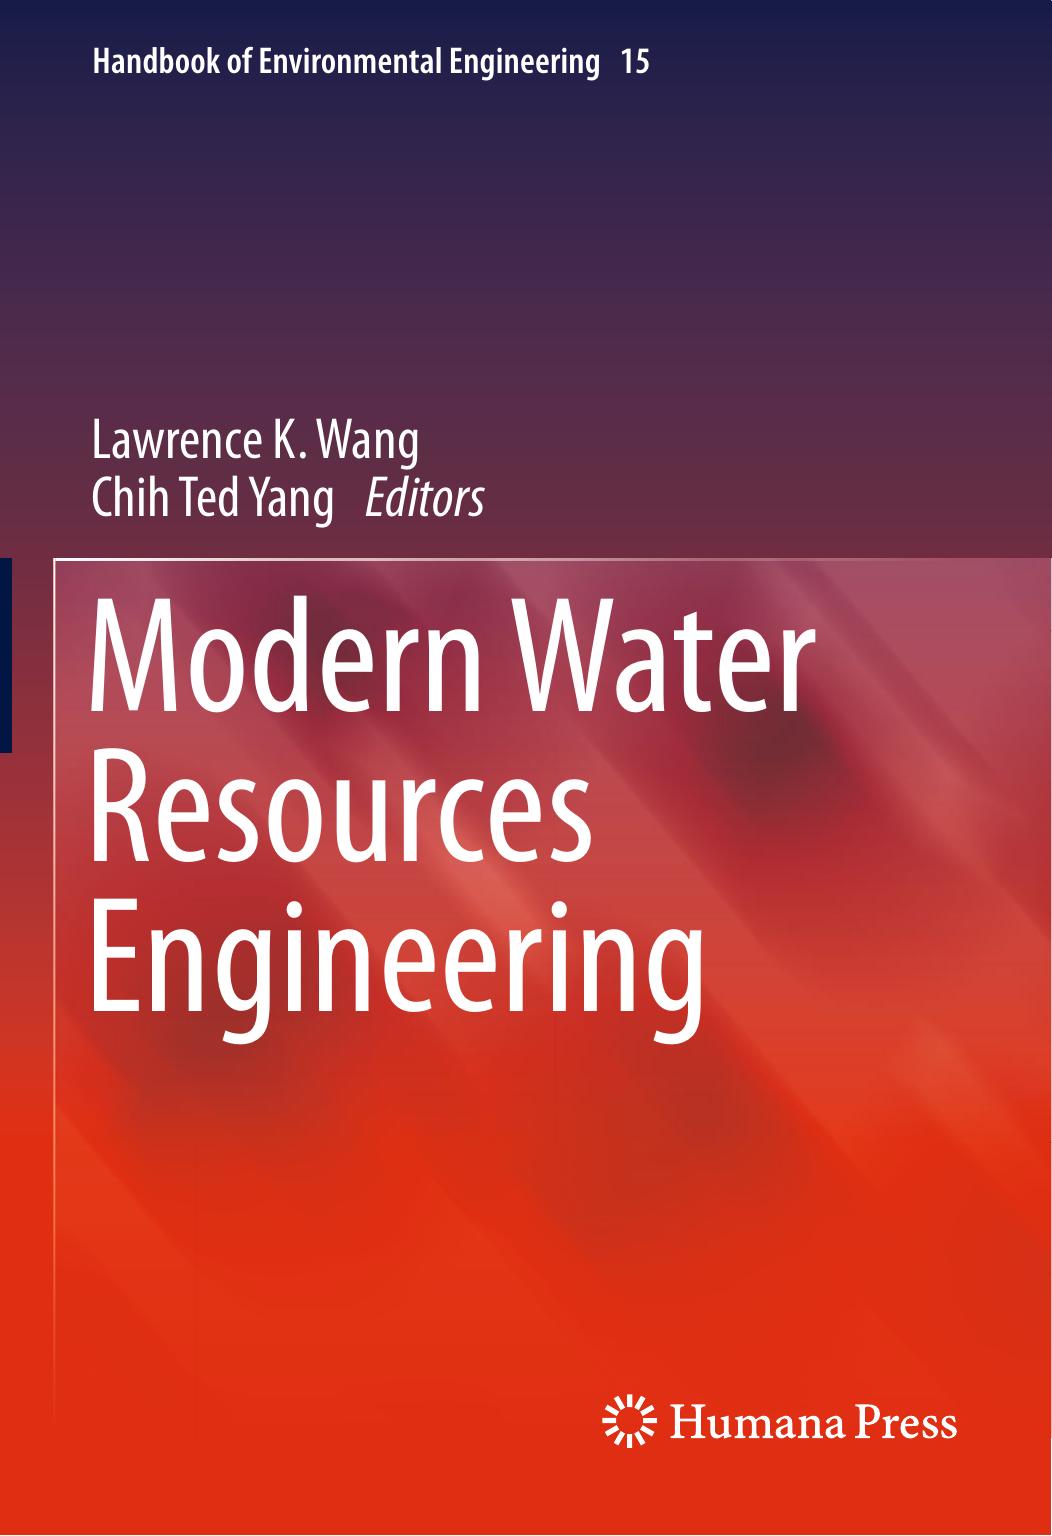 Modern Water Resources Engineering 2014